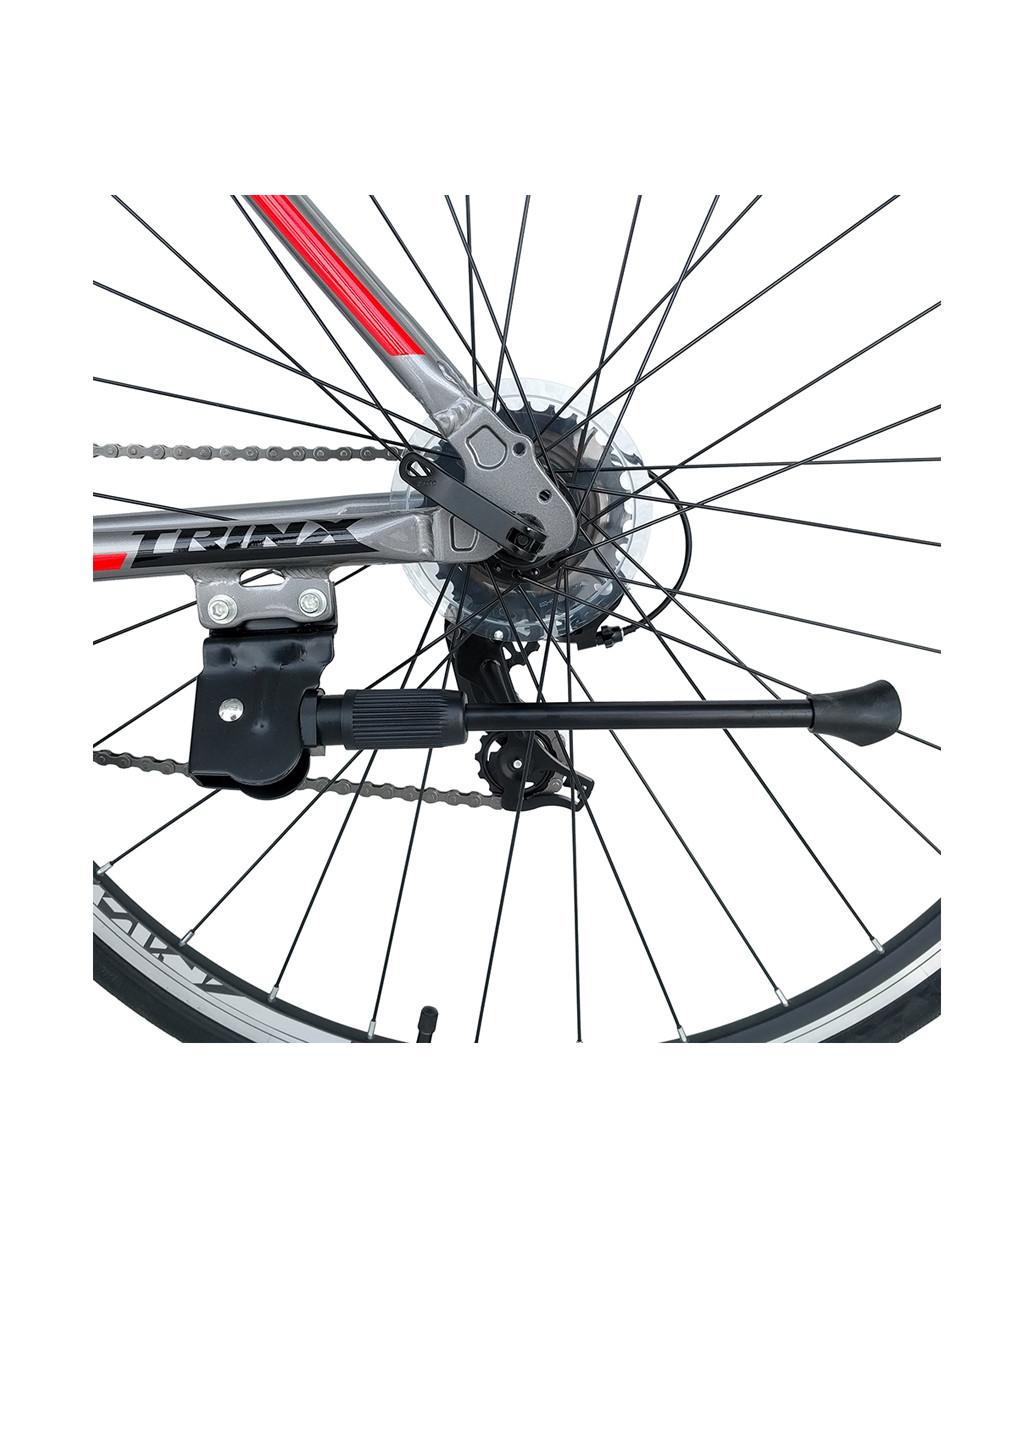 Велосипед Free 1.0 700C * 470 Grey-Black-Red Trinx free 1.0 700c*470 grey-black-red (146489511)